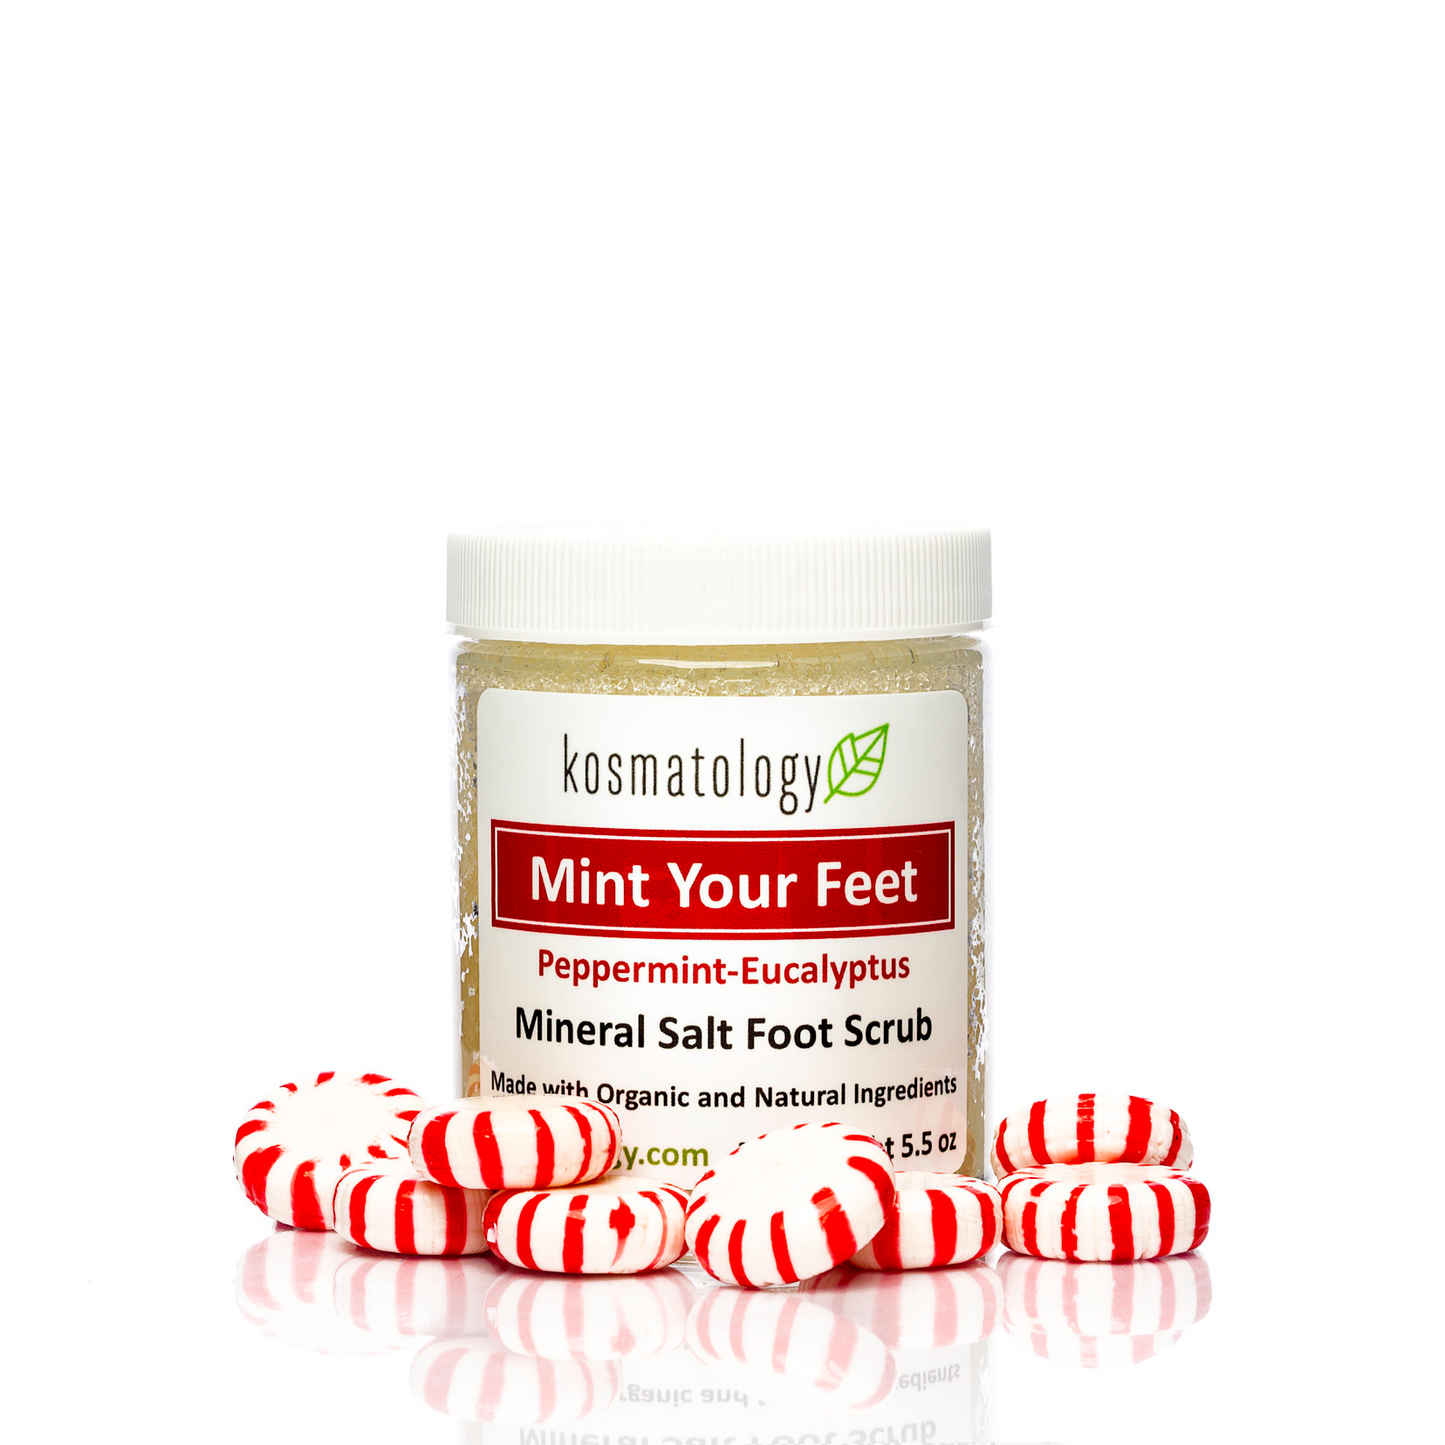 Kosmatology Mint Your Feet Mineral Salt Foot Scrub MADE SAFE